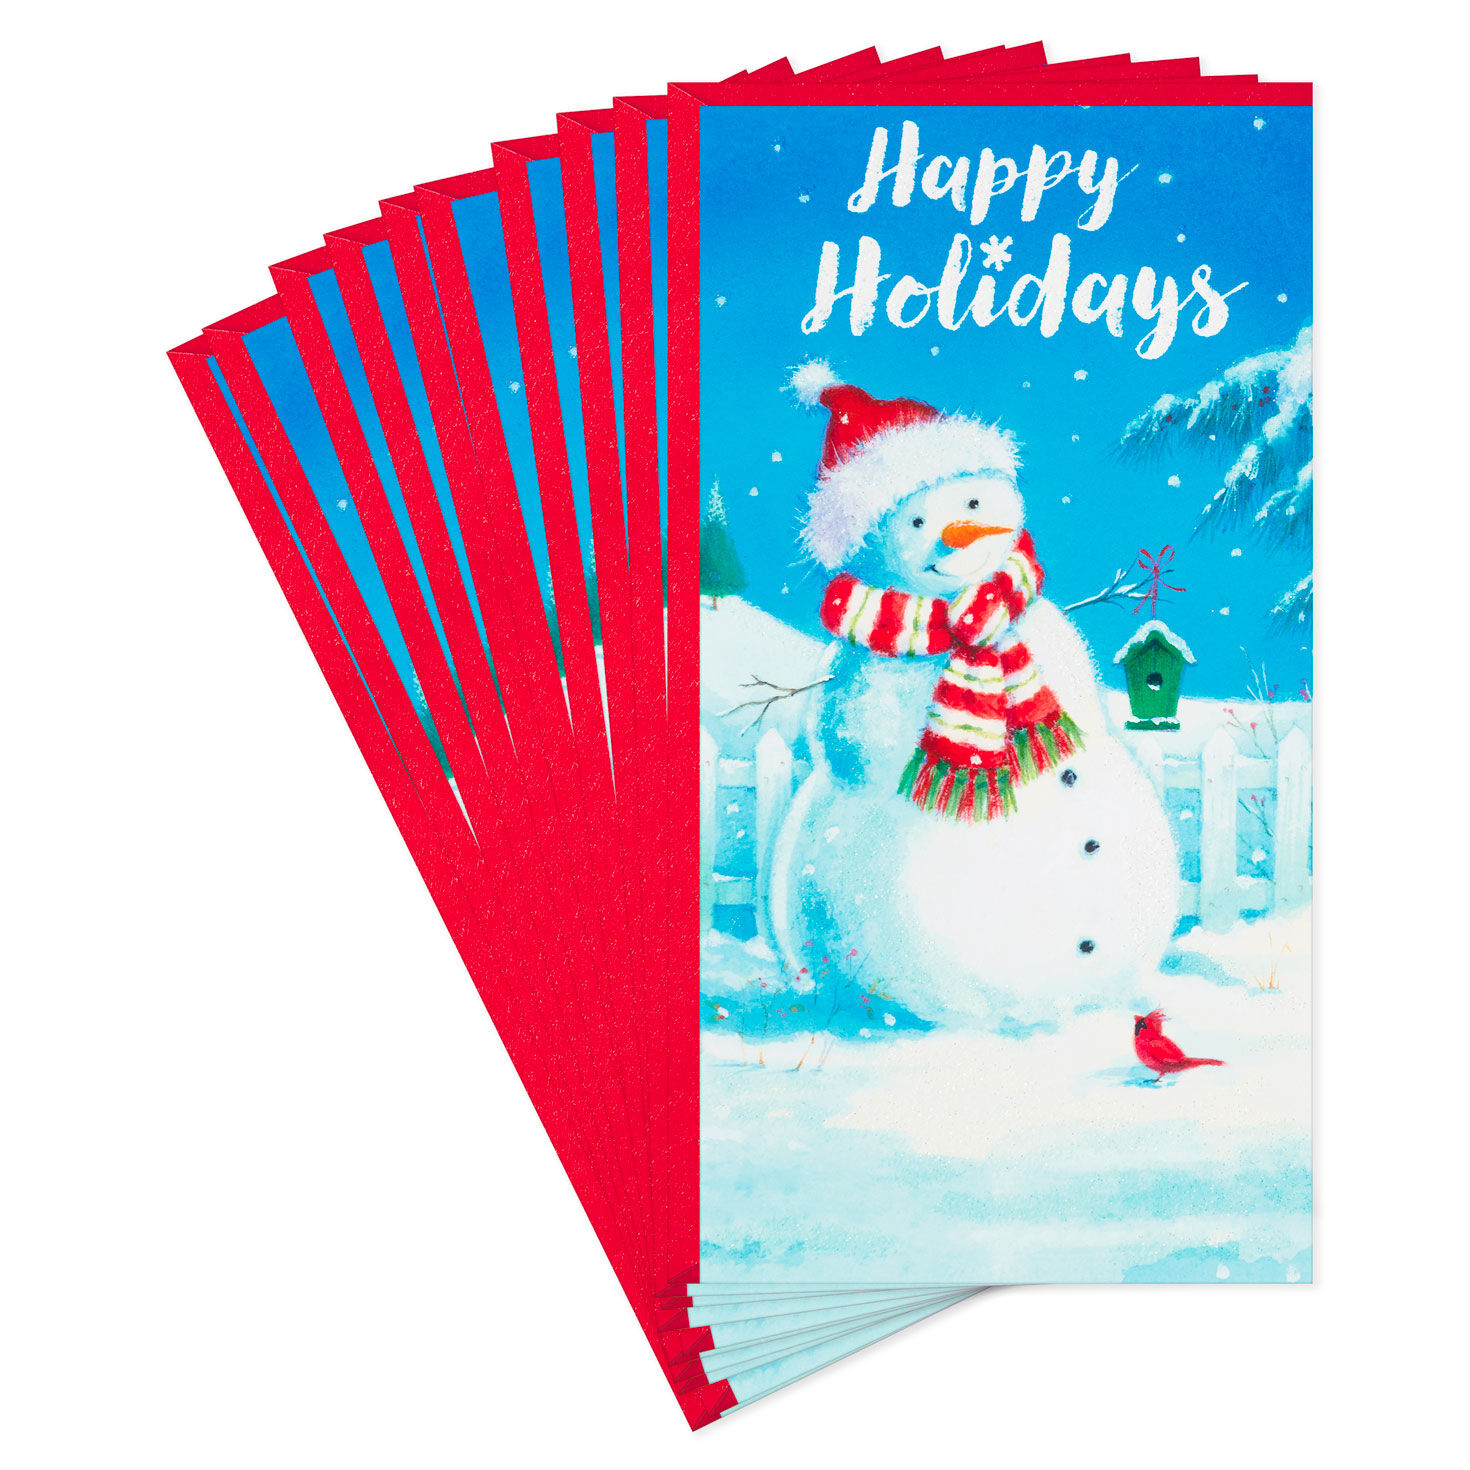 https://www.hallmark.com/dw/image/v2/AALB_PRD/on/demandware.static/-/Sites-hallmark-master/default/dw1a43ae41/images/finished-goods/products/799XMH4684/Snowman-&-Birdhouse-Money-Holder-Christmas-Cards-Multipack_799XMH4684_01.jpg?sfrm=jpg